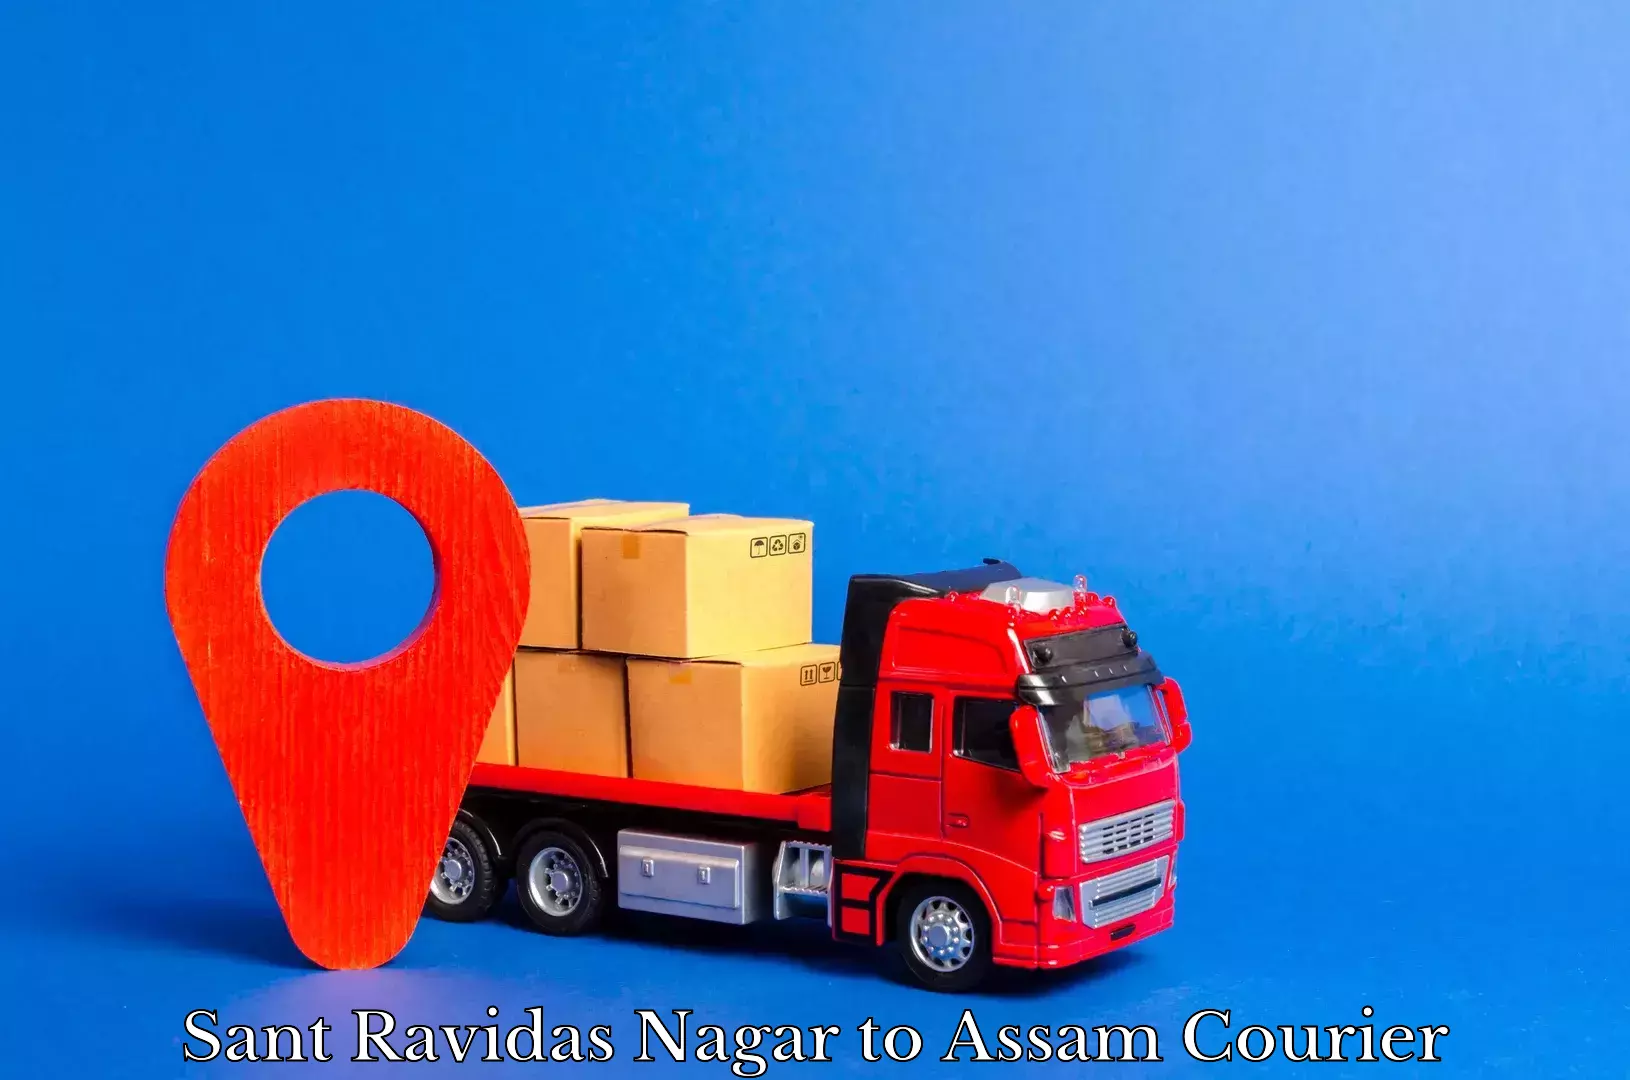 Reliable delivery network Sant Ravidas Nagar to Assam